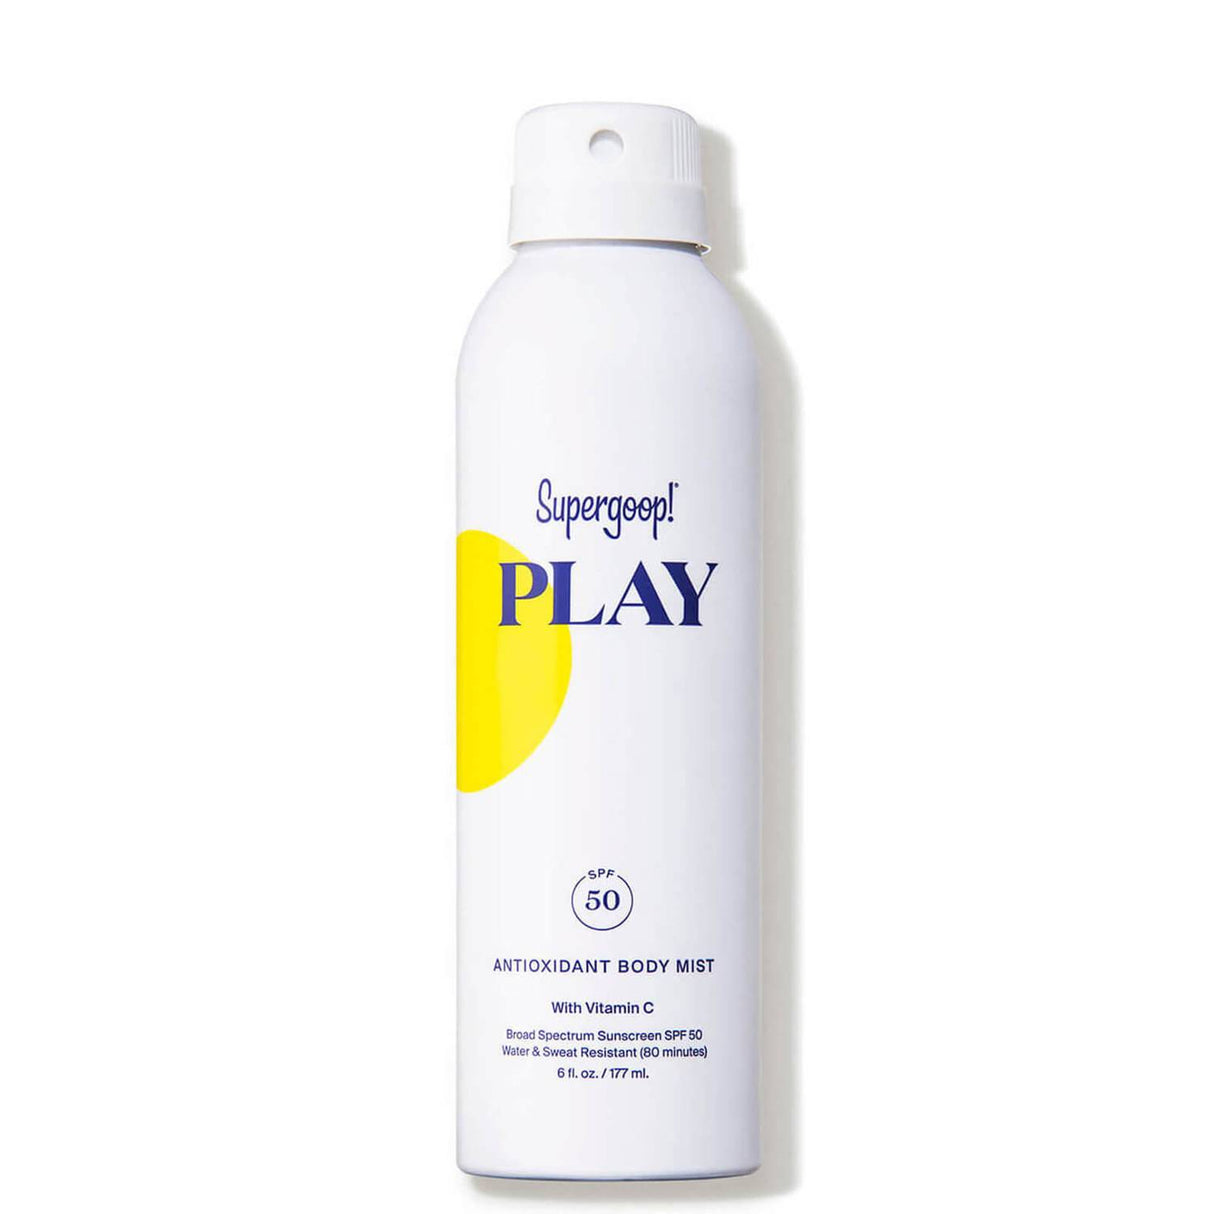 Supergoop!® PLAY Antioxidant Body Mist SPF 50 with Vitamin C